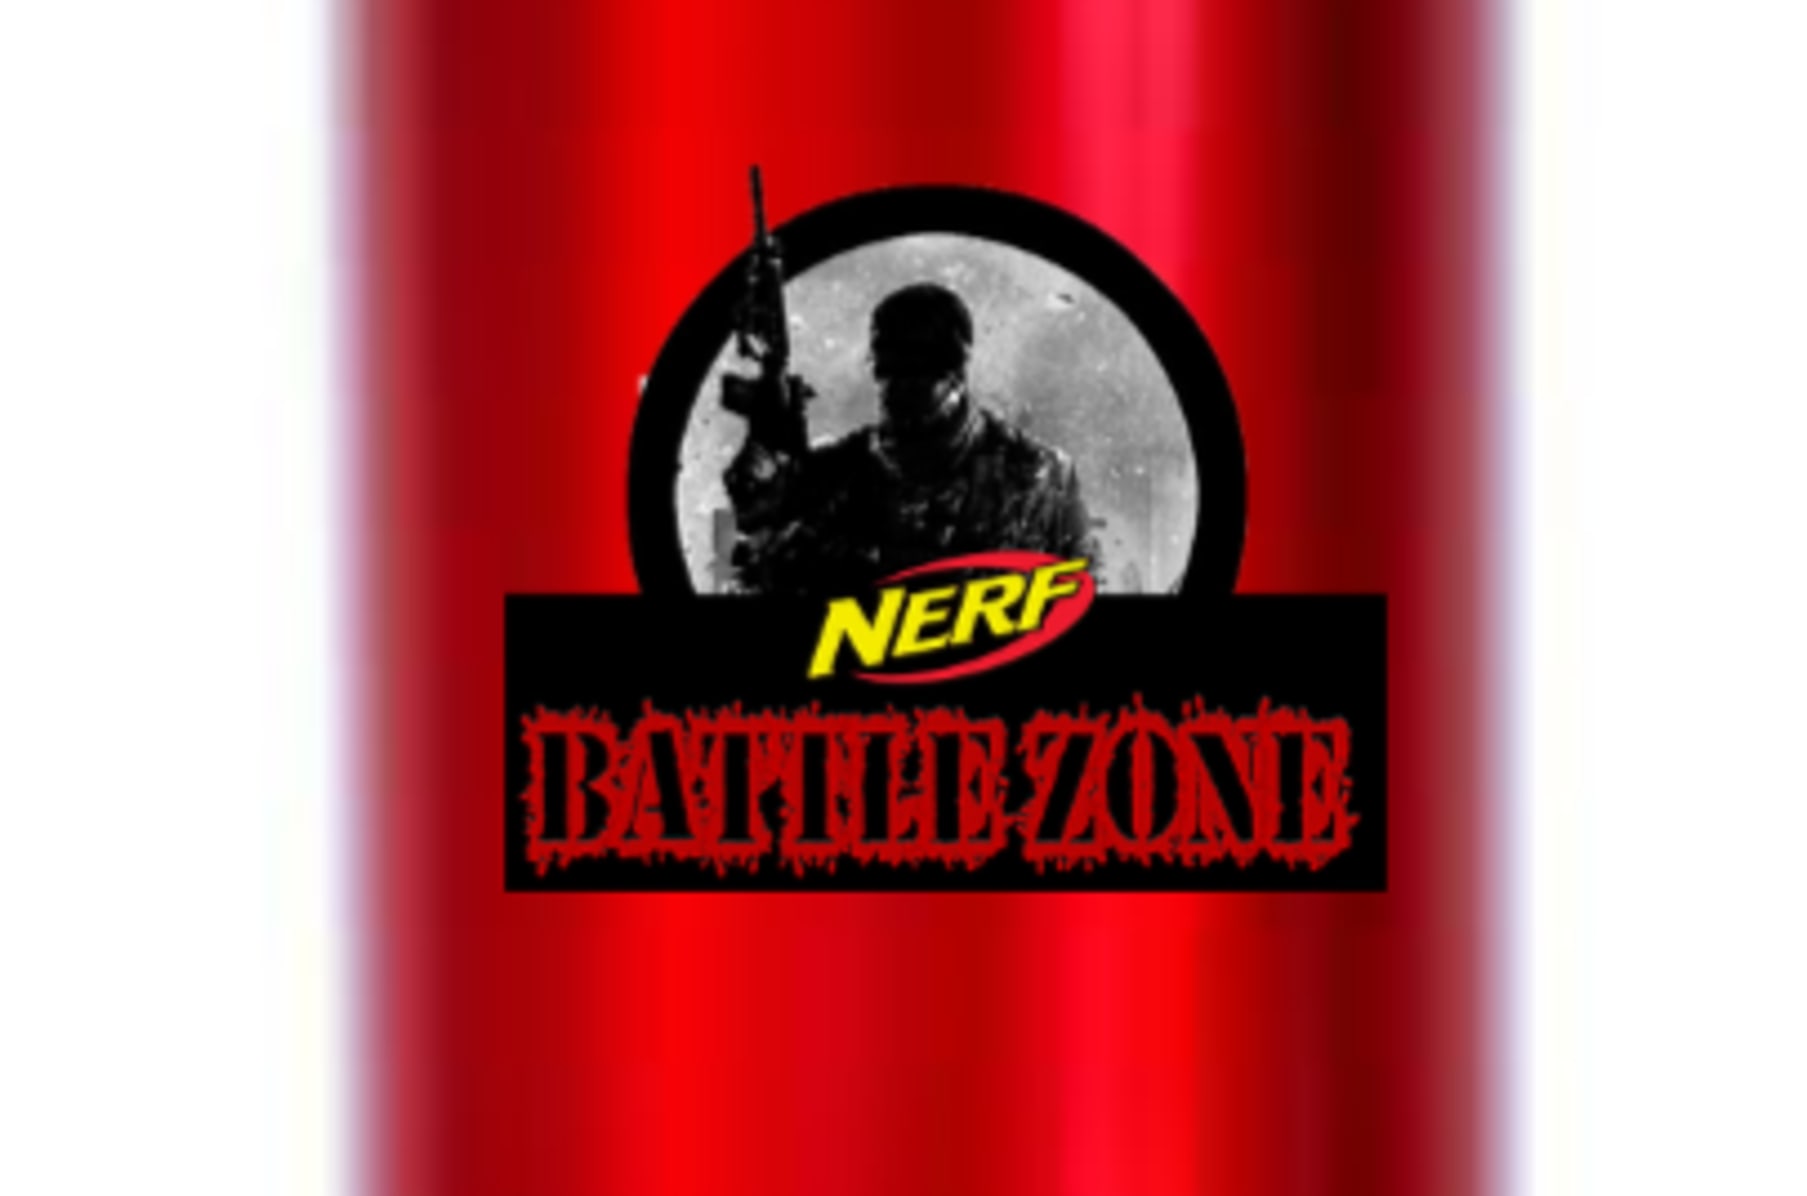 Nerf Team Nerf Logo Sticker by Amer Zonair - Pixels